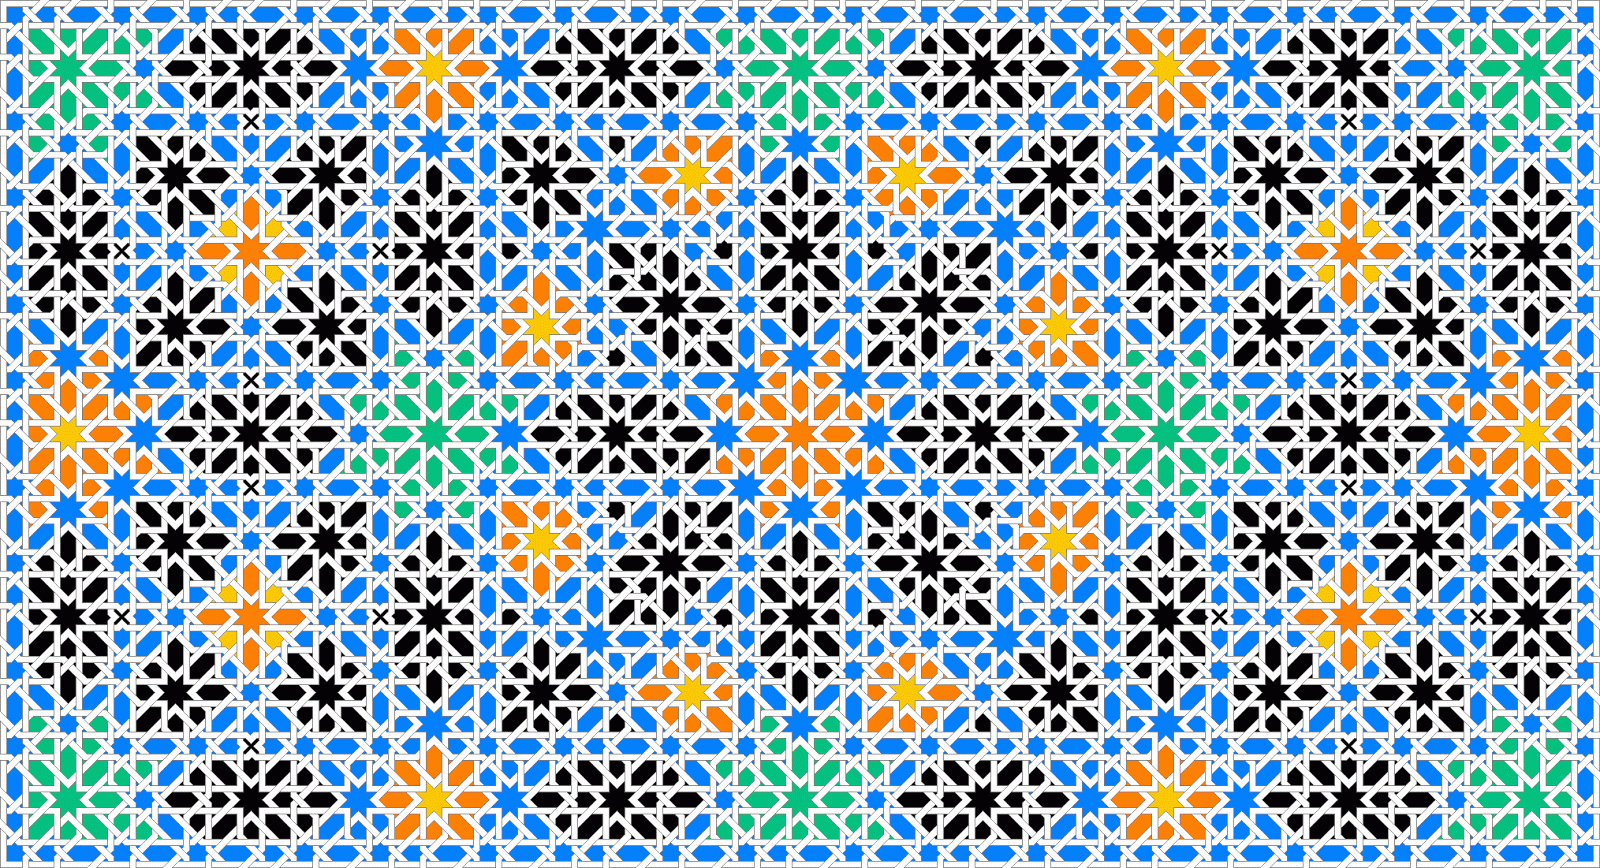 Quran translation in urdu, islamic patterns